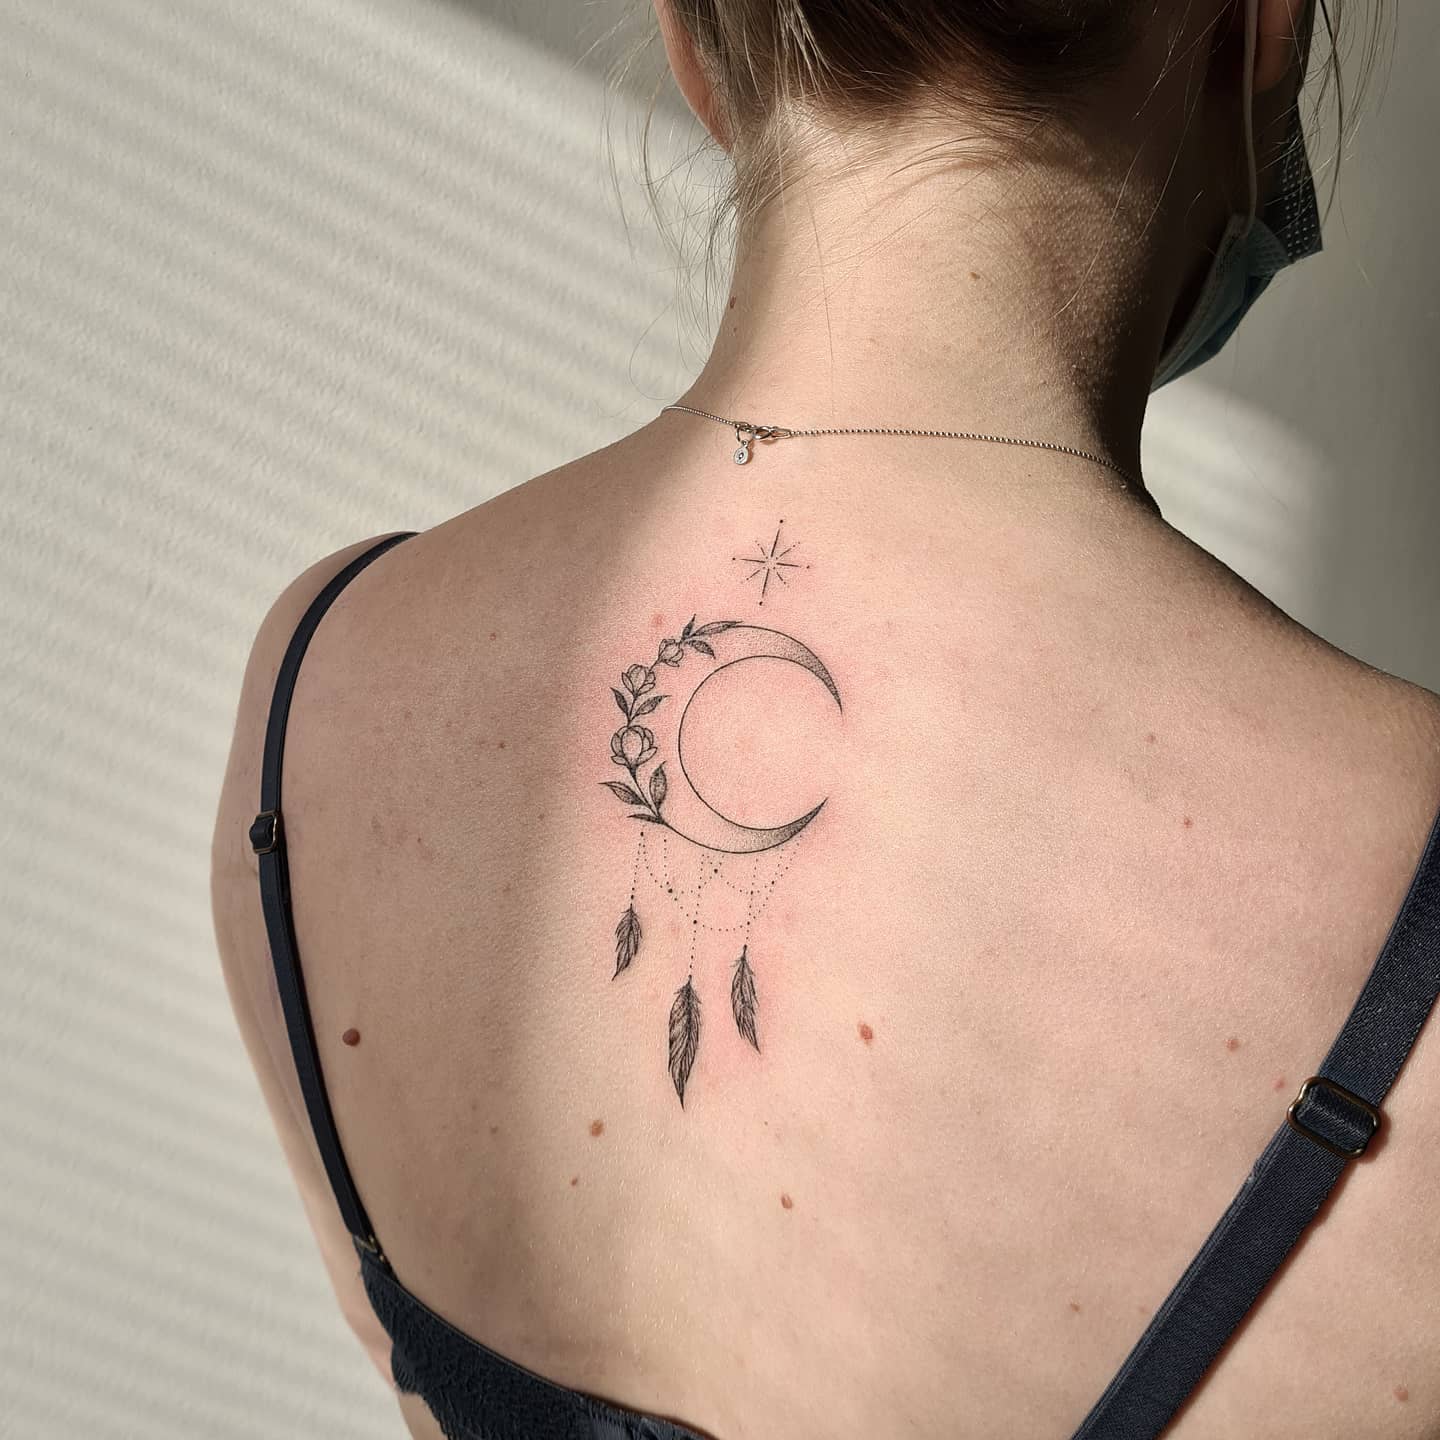 Tatuaje atrapasueños de luna floral